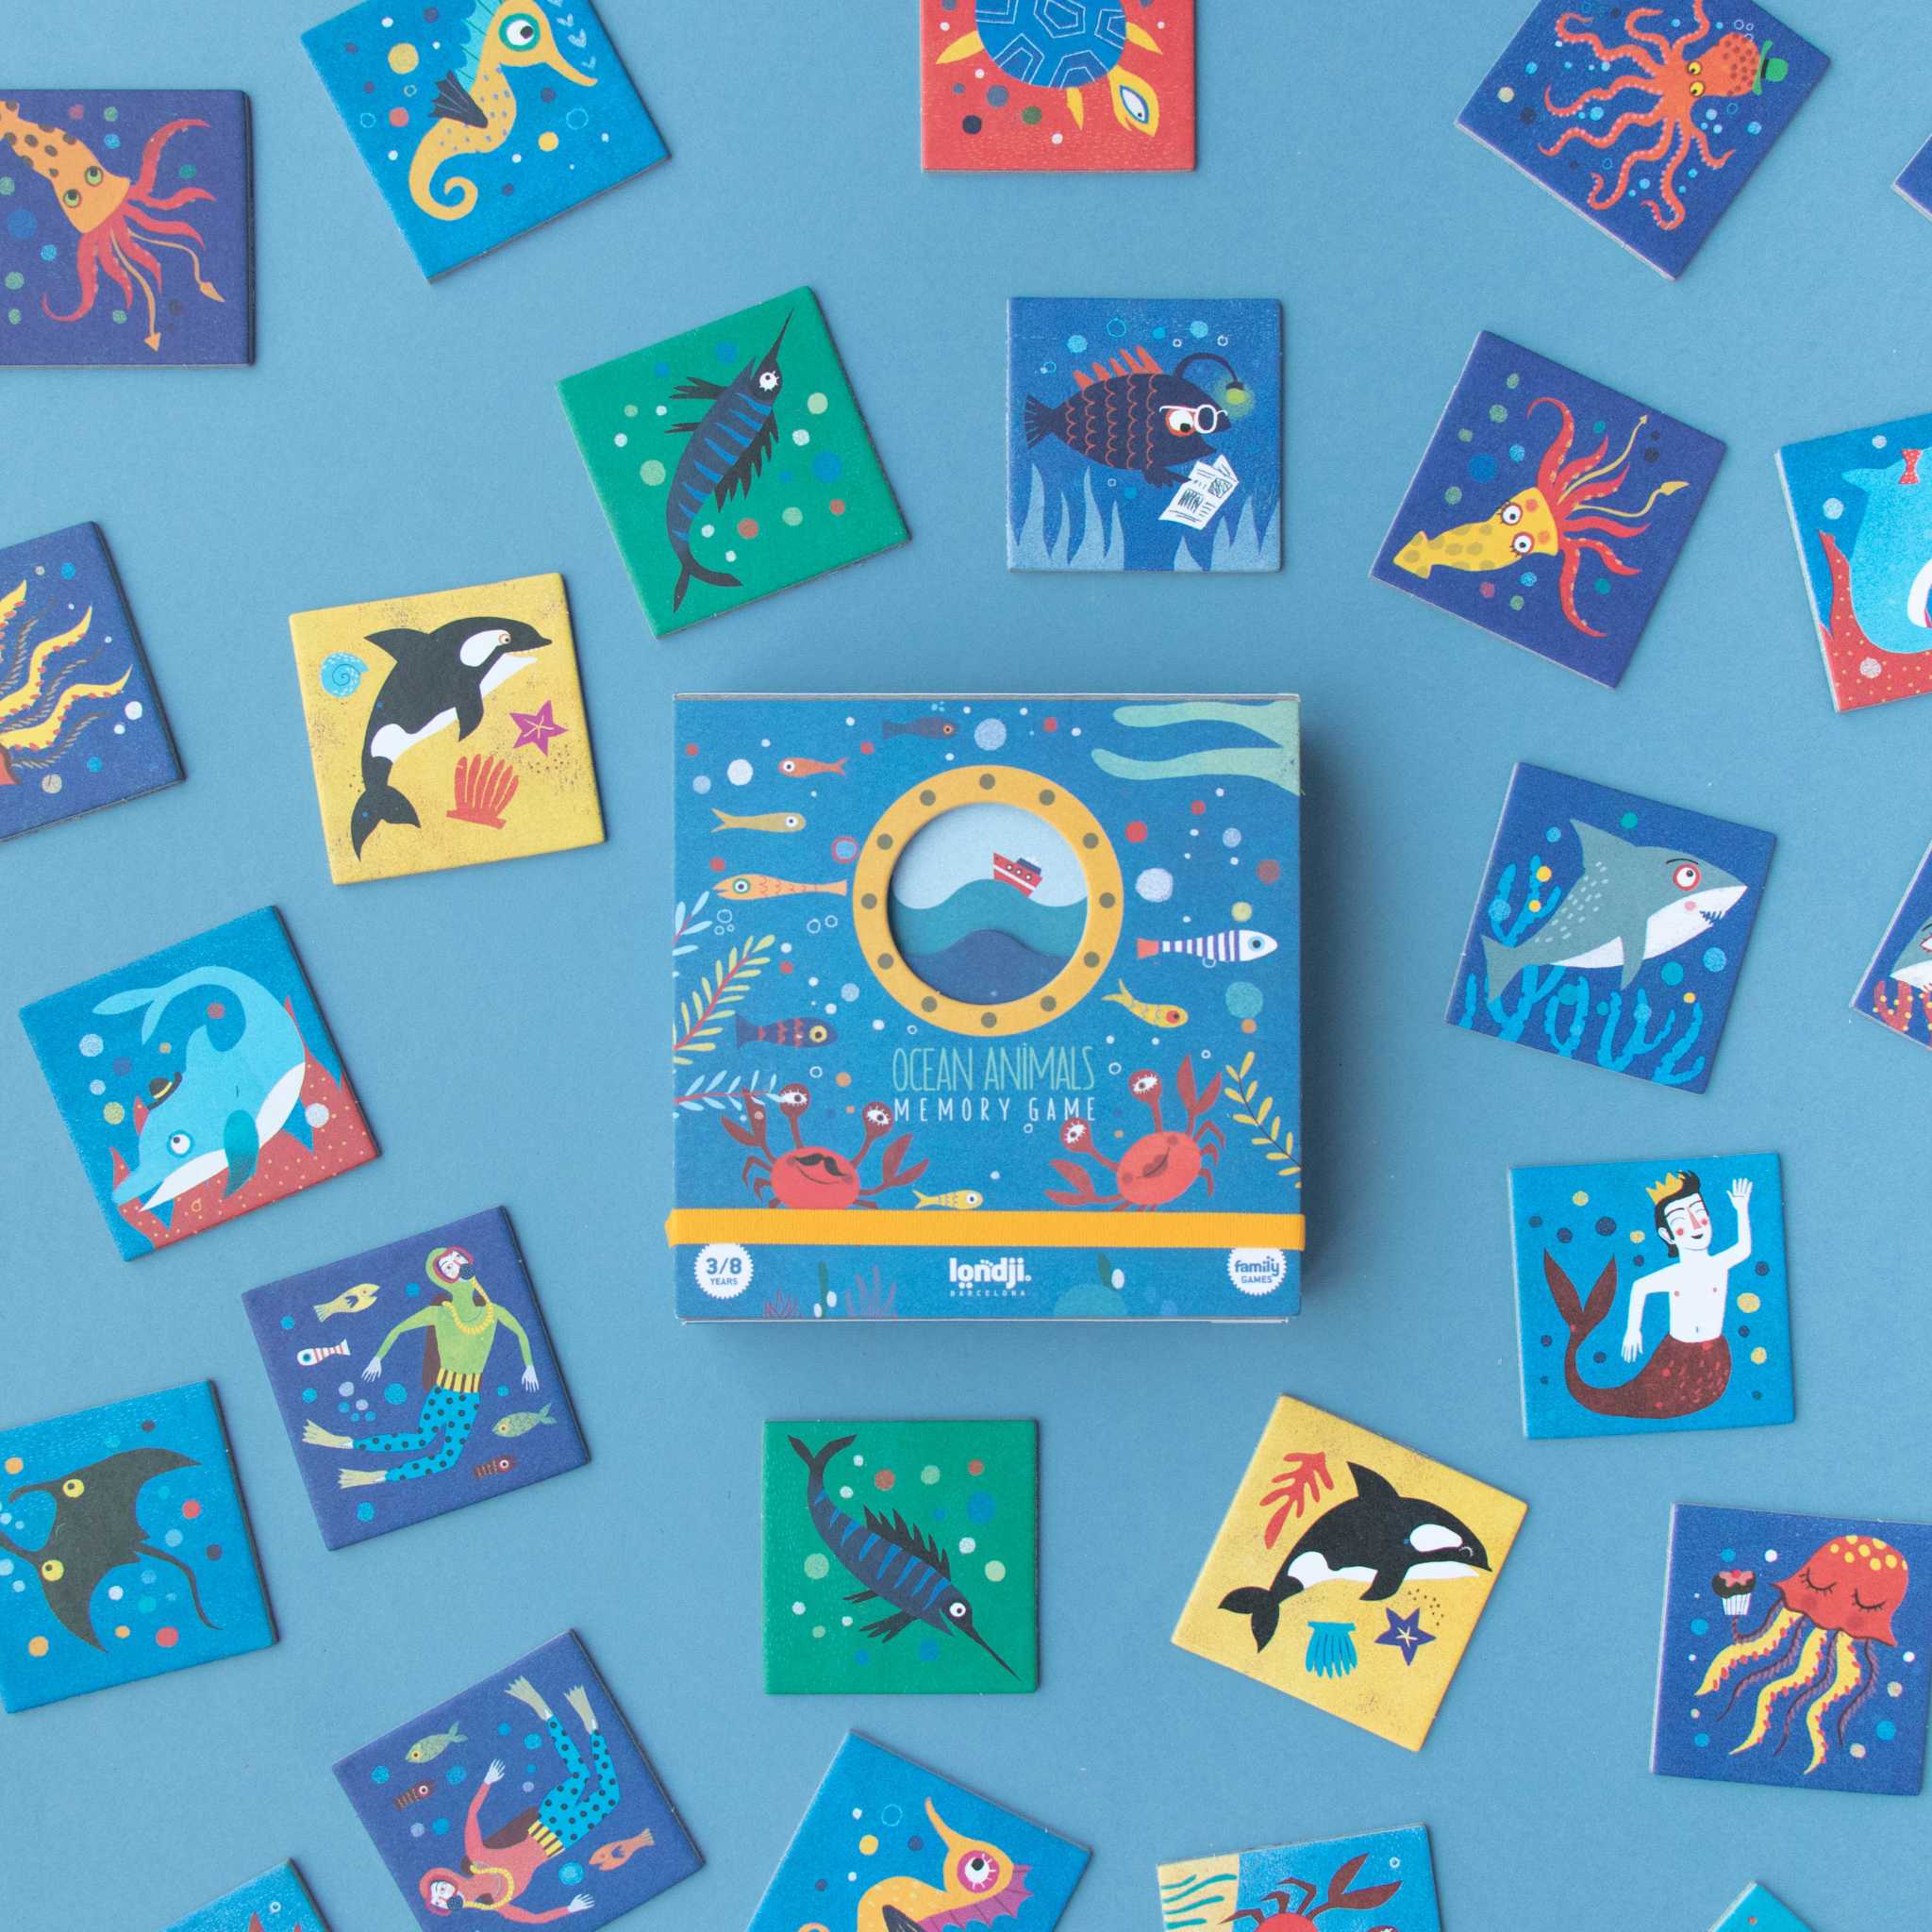 Londji Ocean Animals Memo Game Main Image Showing Box And Cards